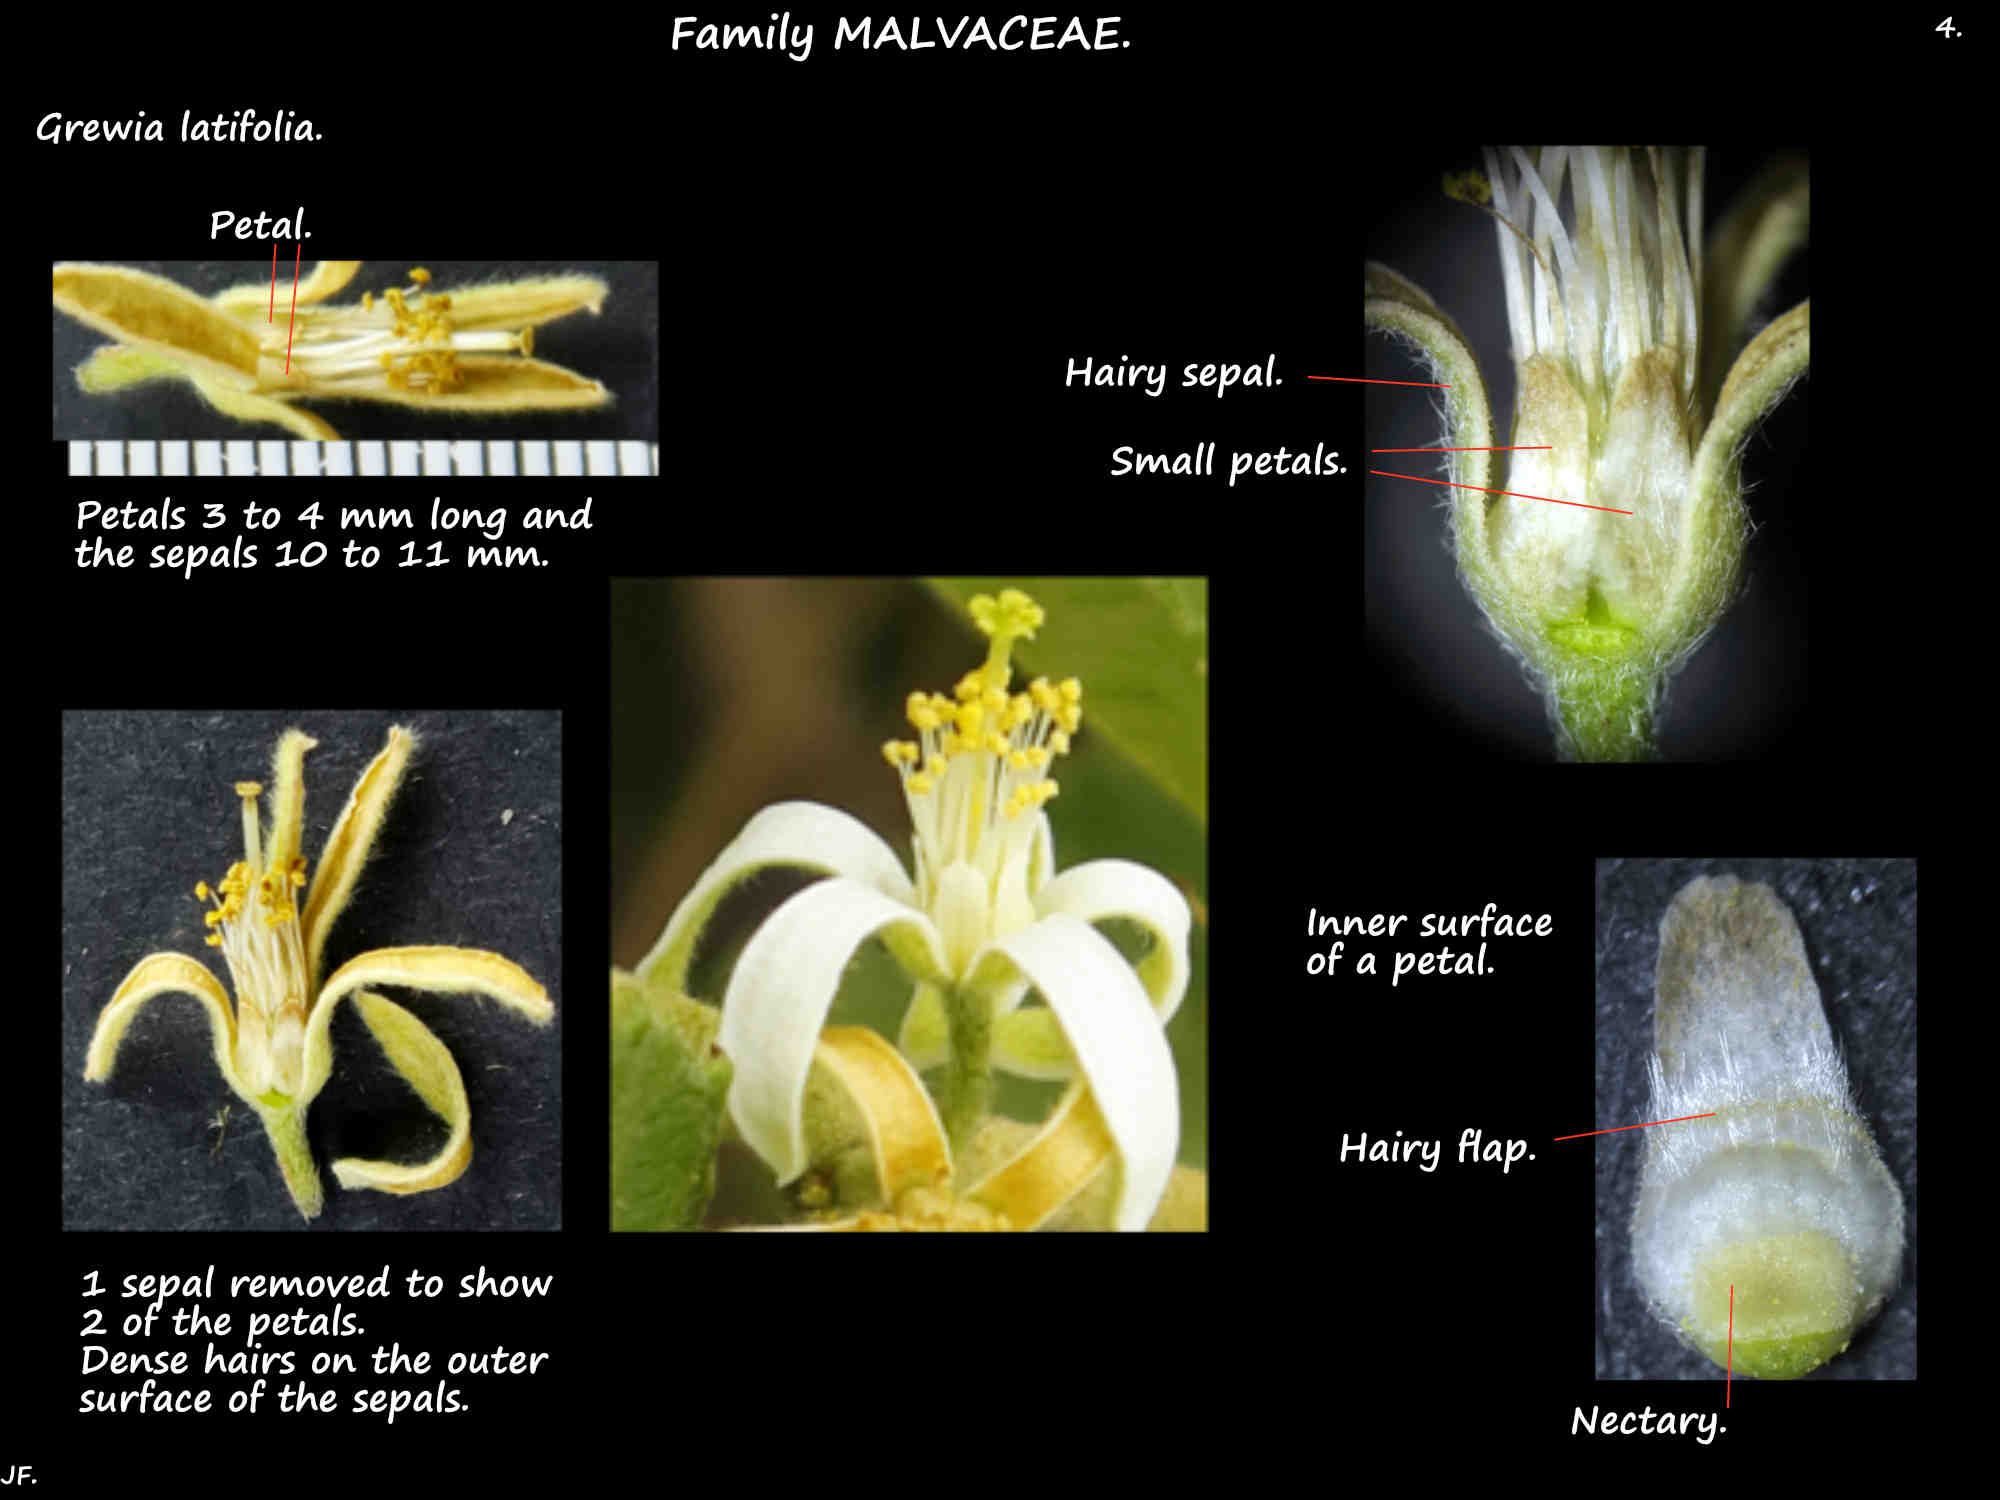 4 Grewia latifolia perianth & nectary